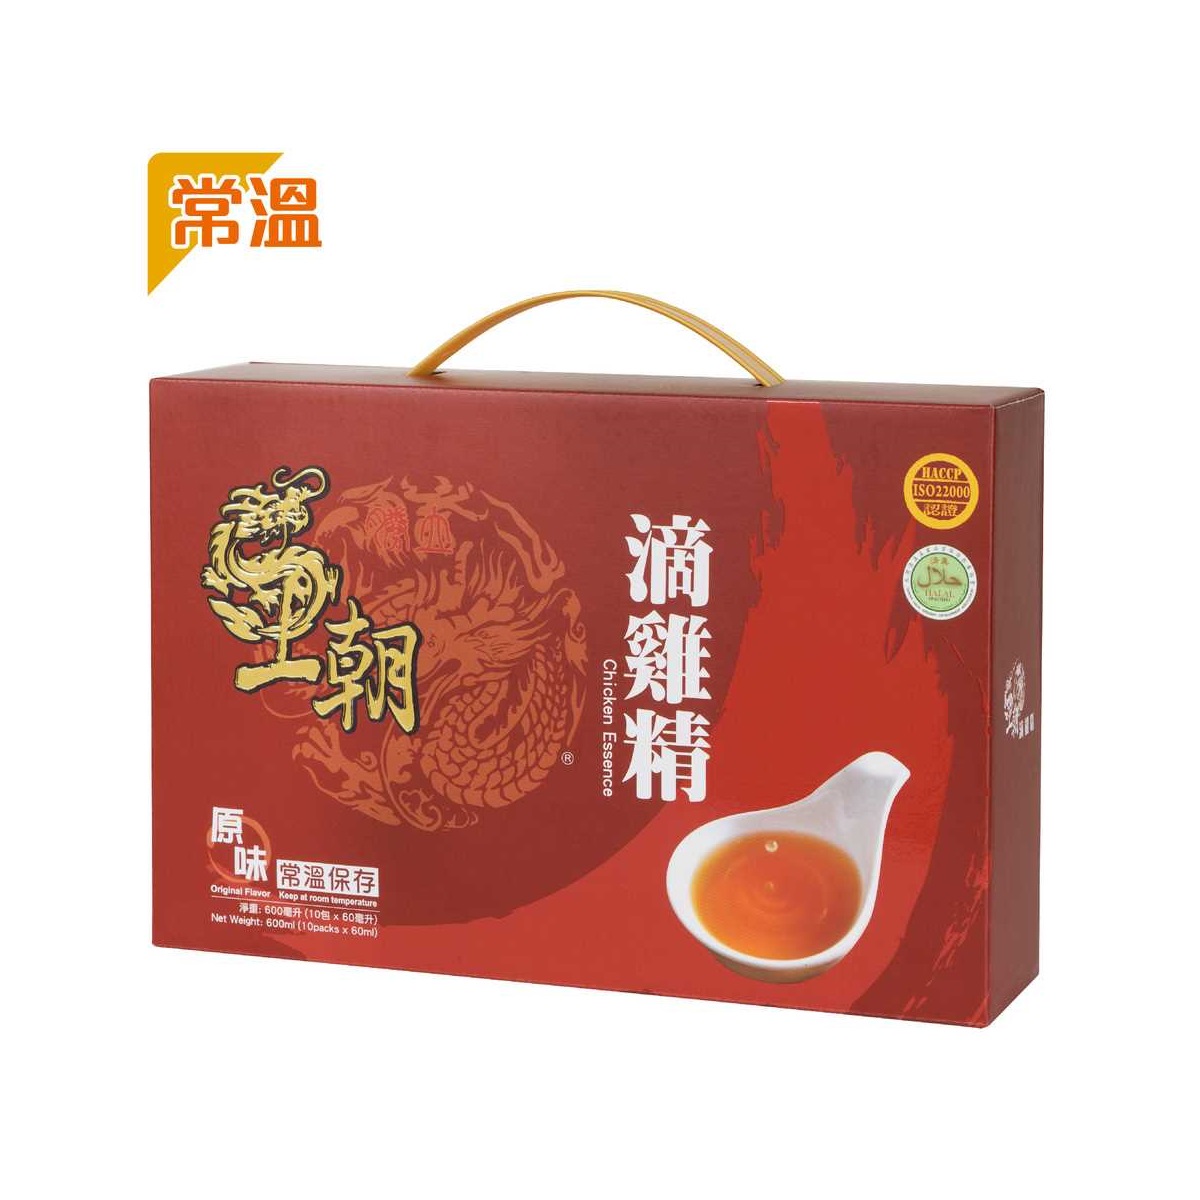 Wang Chao Chicken Essence (Original Flavor) (Ambient - 10 Packs) Bundle of 5